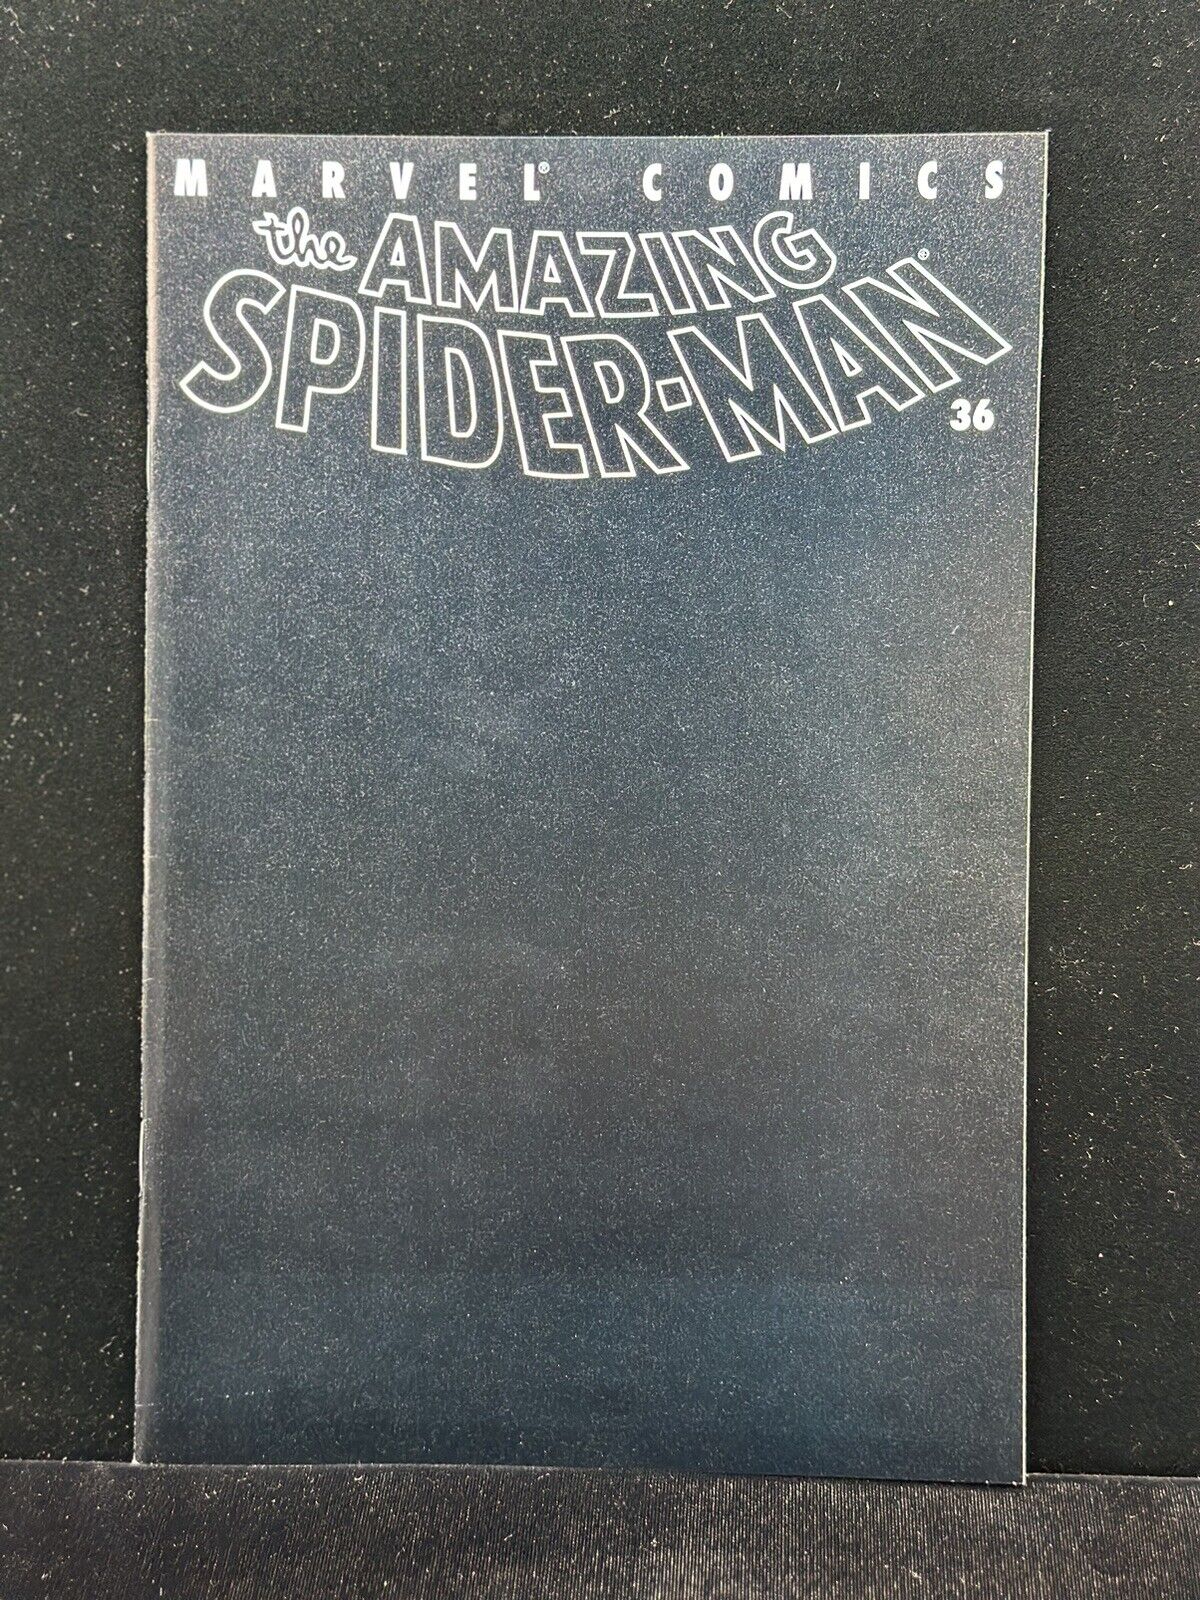 AMAZING SPIDER-MAN #36 Marvel Comics 2001 9/11 Tribute Issue